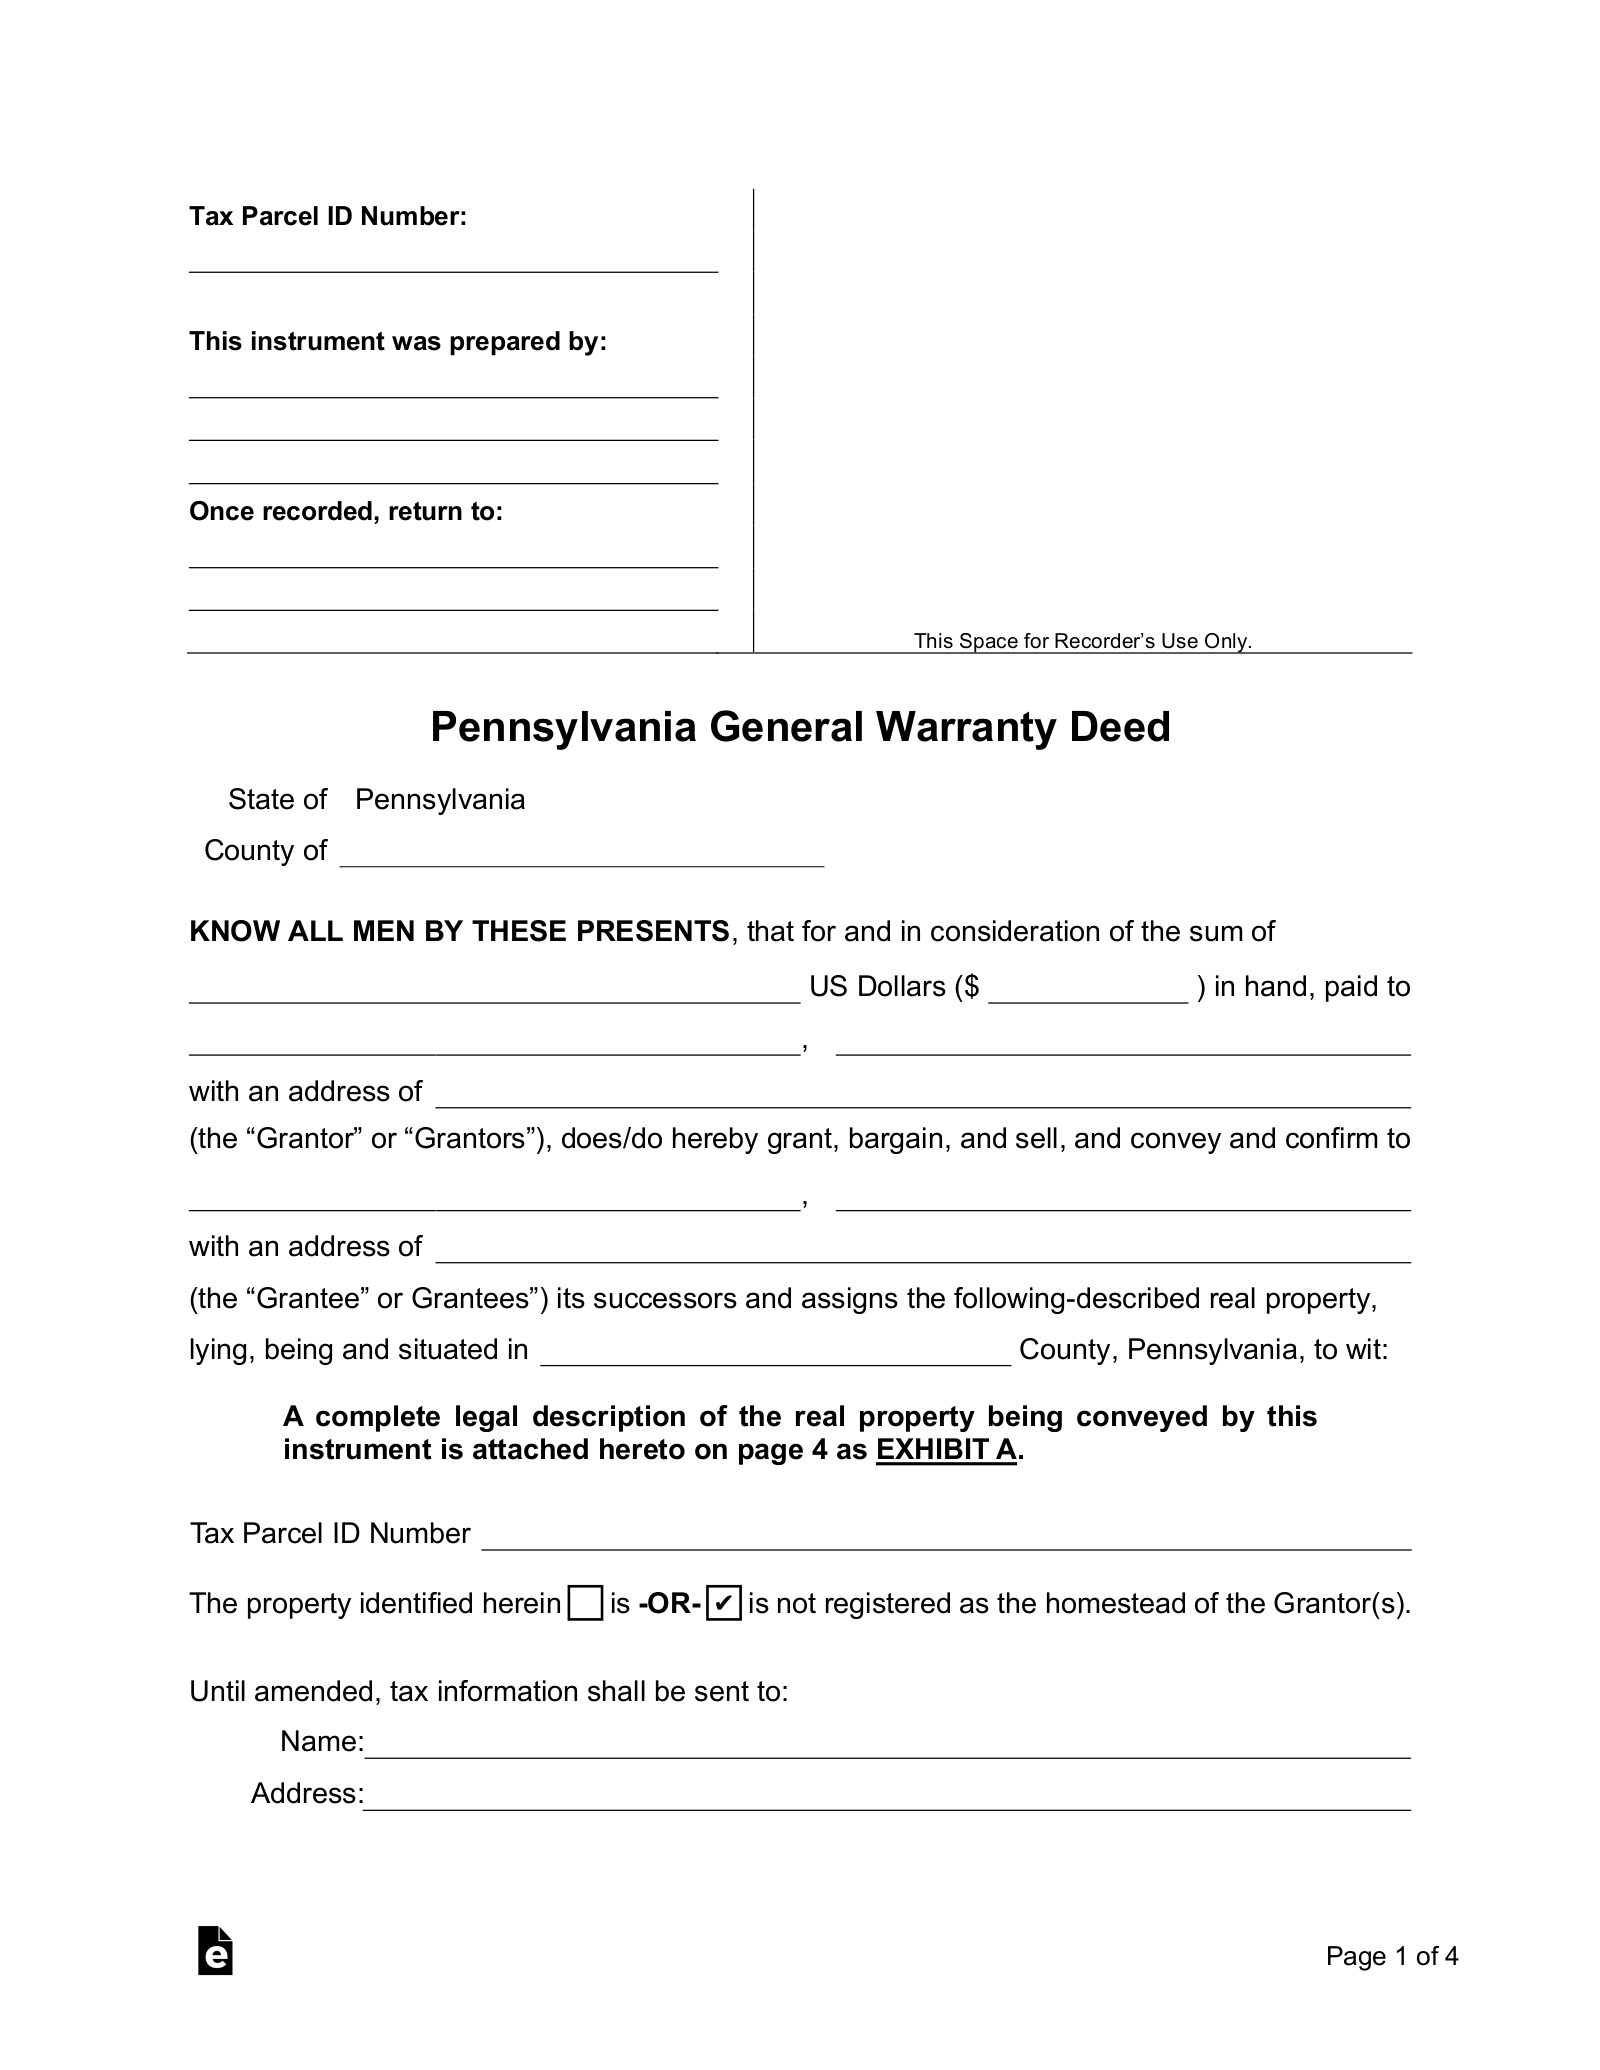 Pennsylvania General Warranty Deed Form